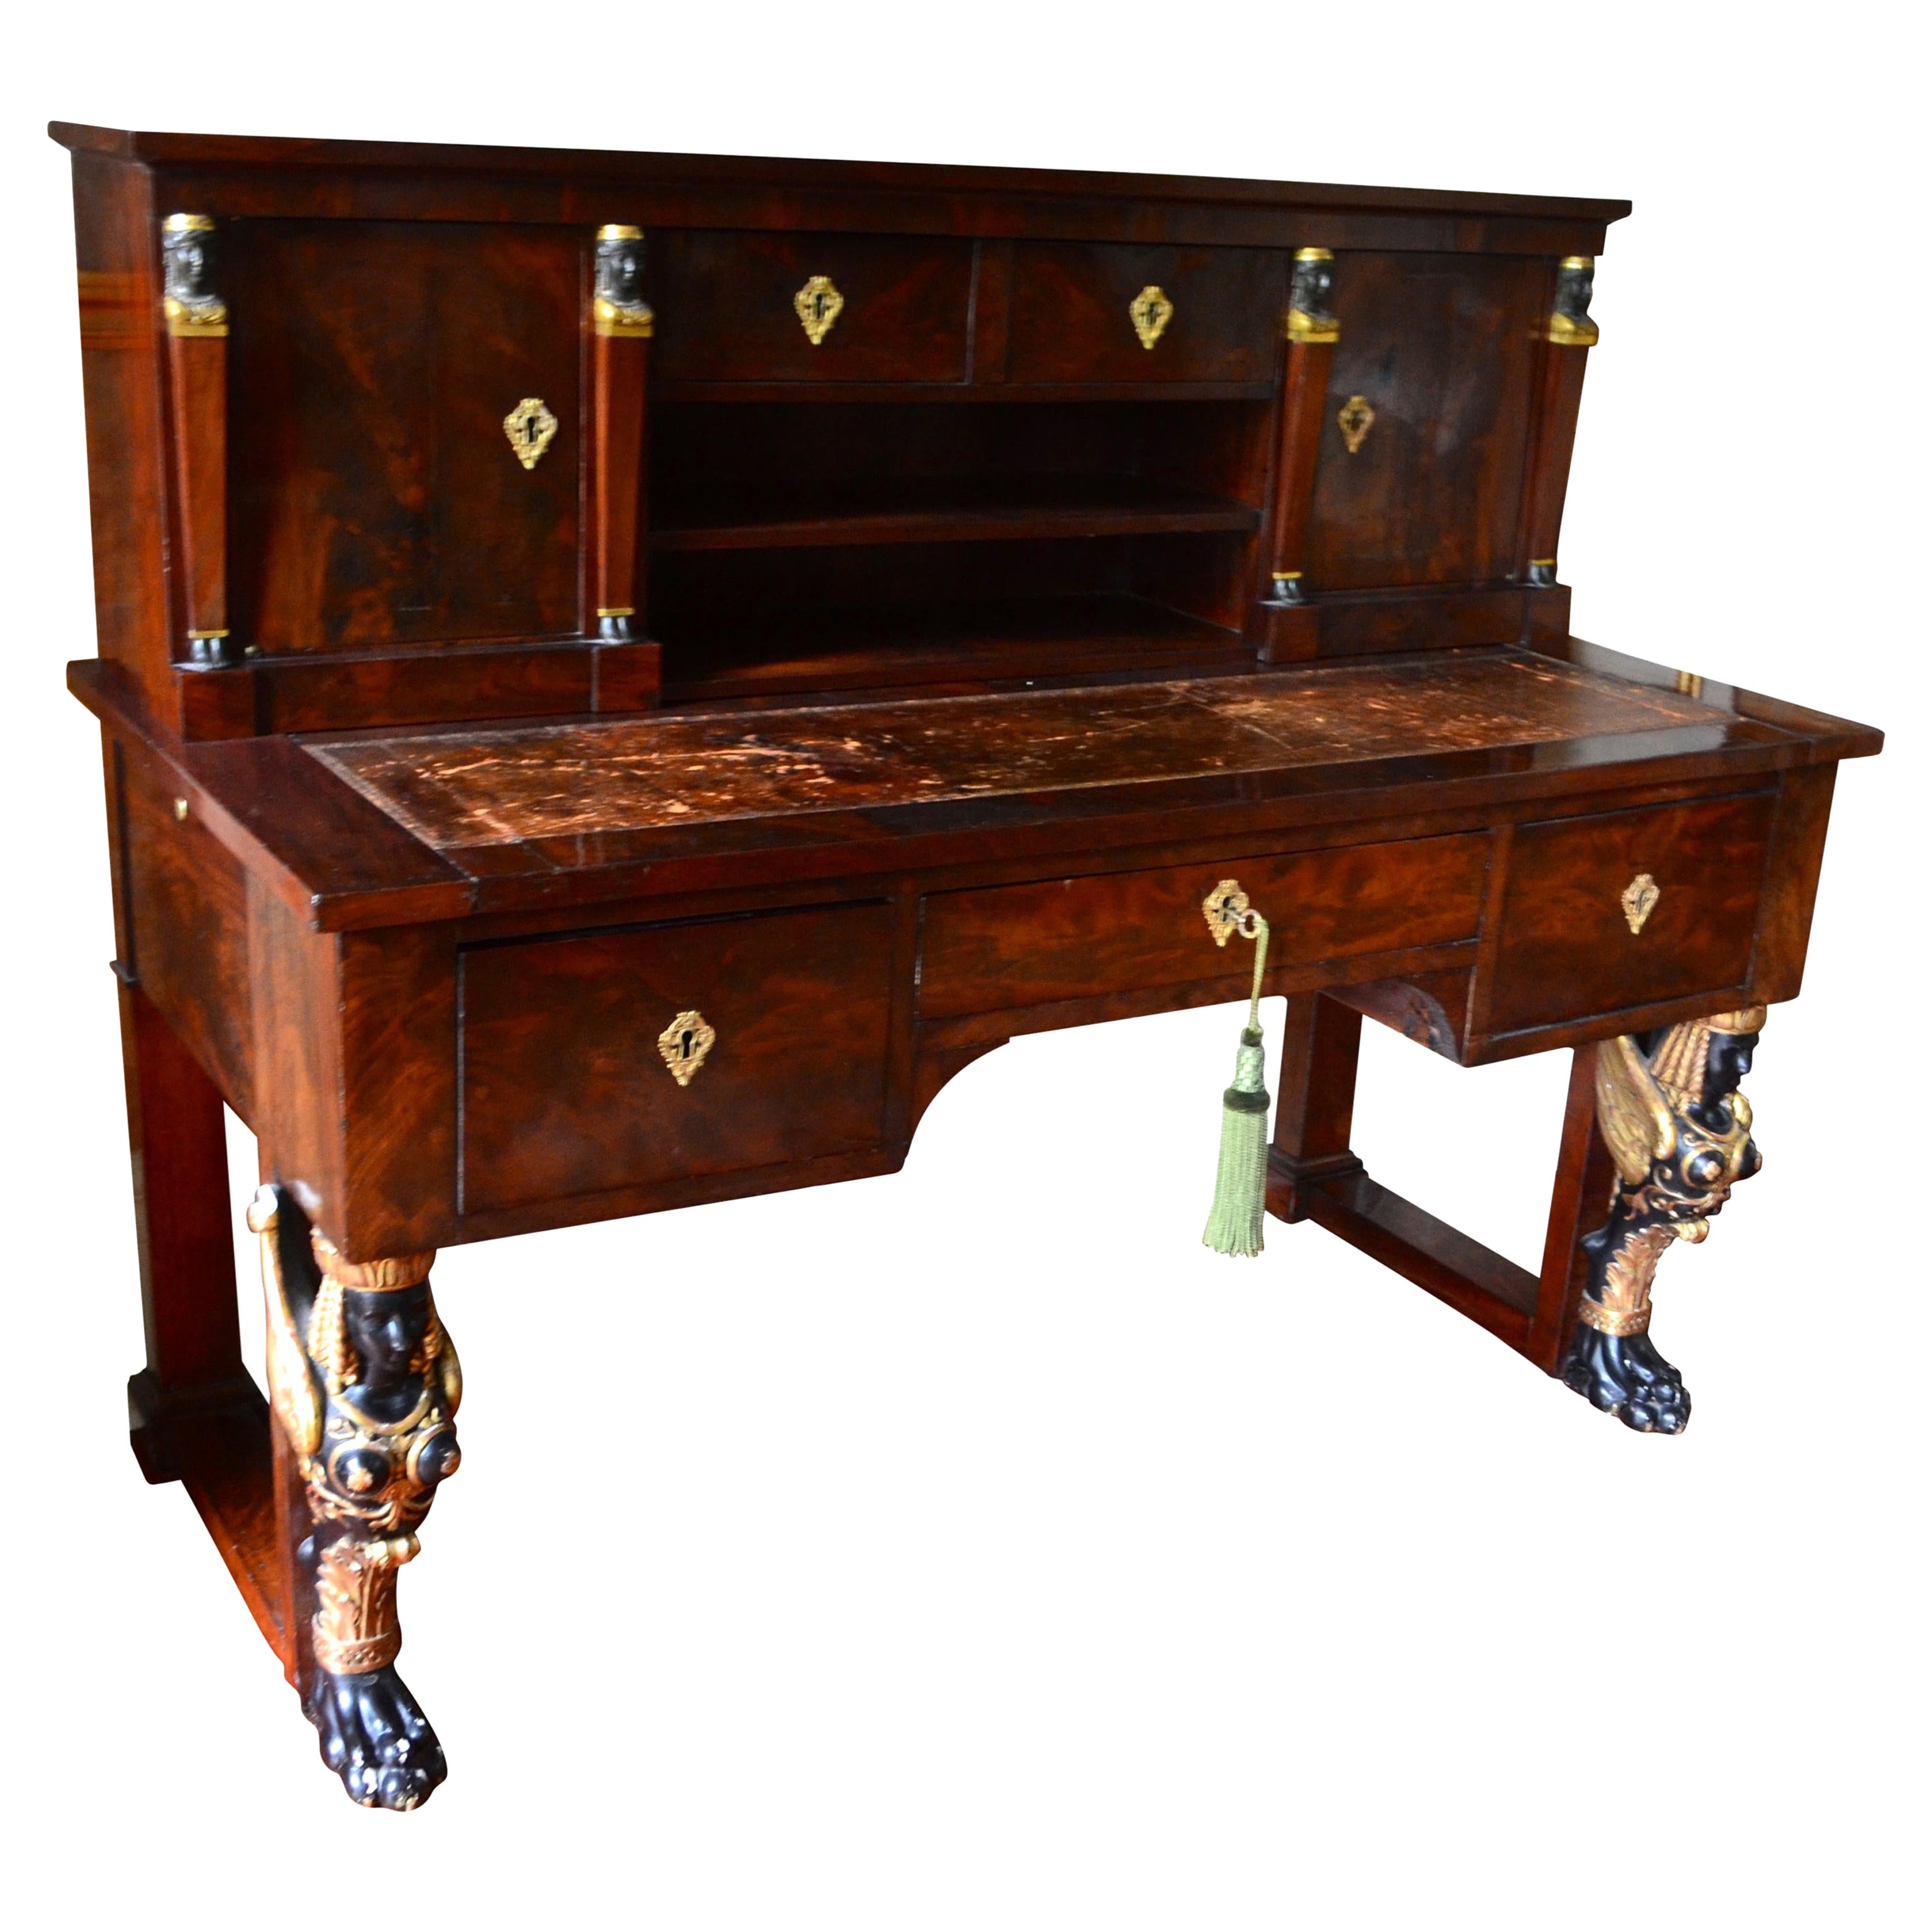 Early 19th Century French Empire  "Bureau a Gradin" Desk For Sale